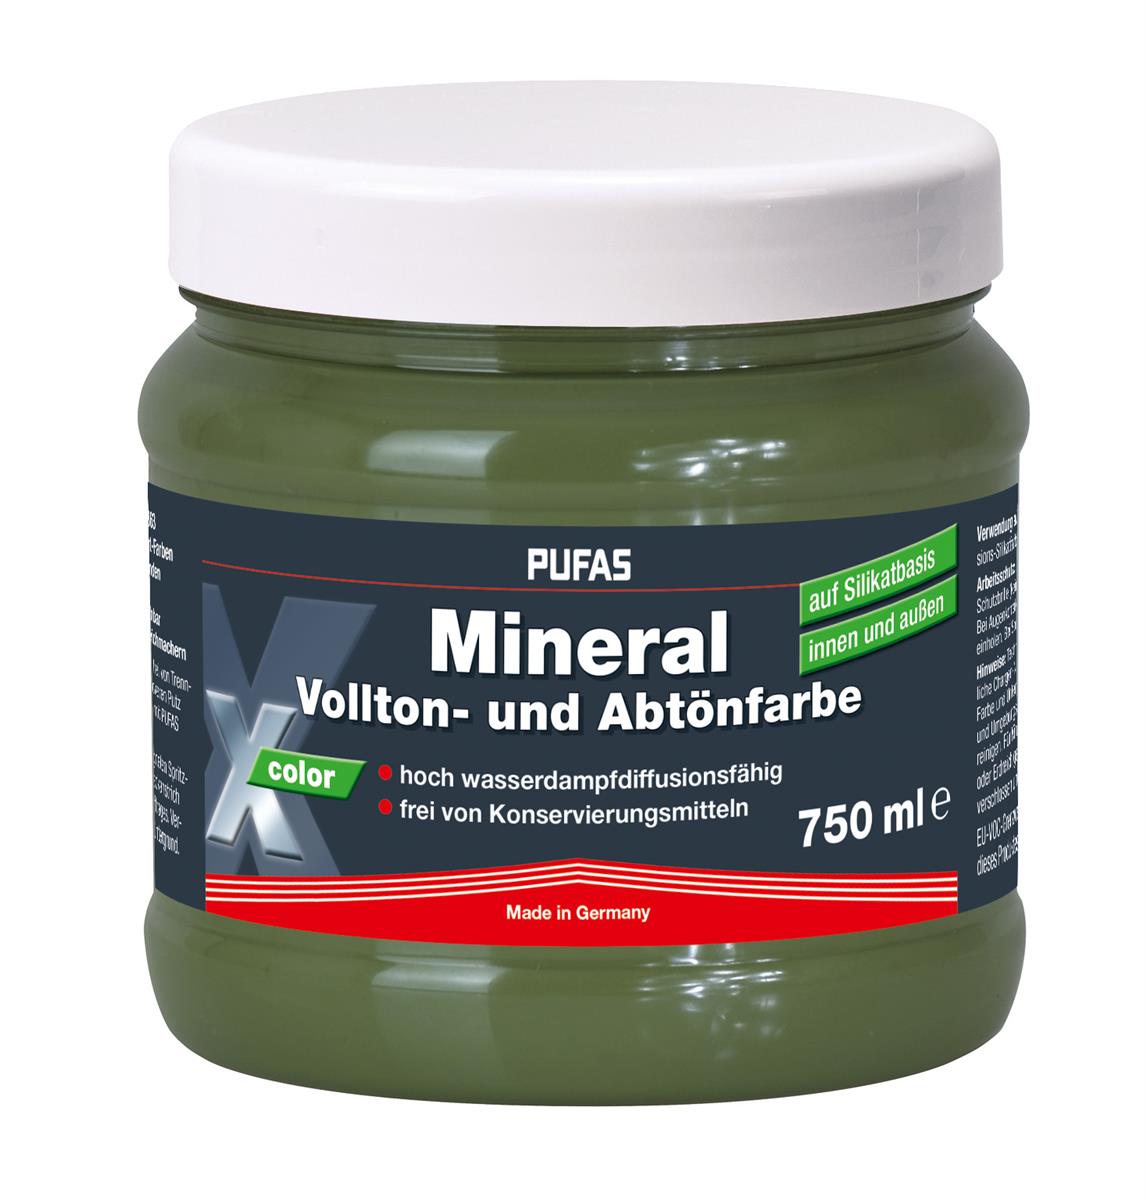 PUFAS Mineral Vollton-und Abtönfarbe Oxidgrün - 750 ml - Oxidrgrün